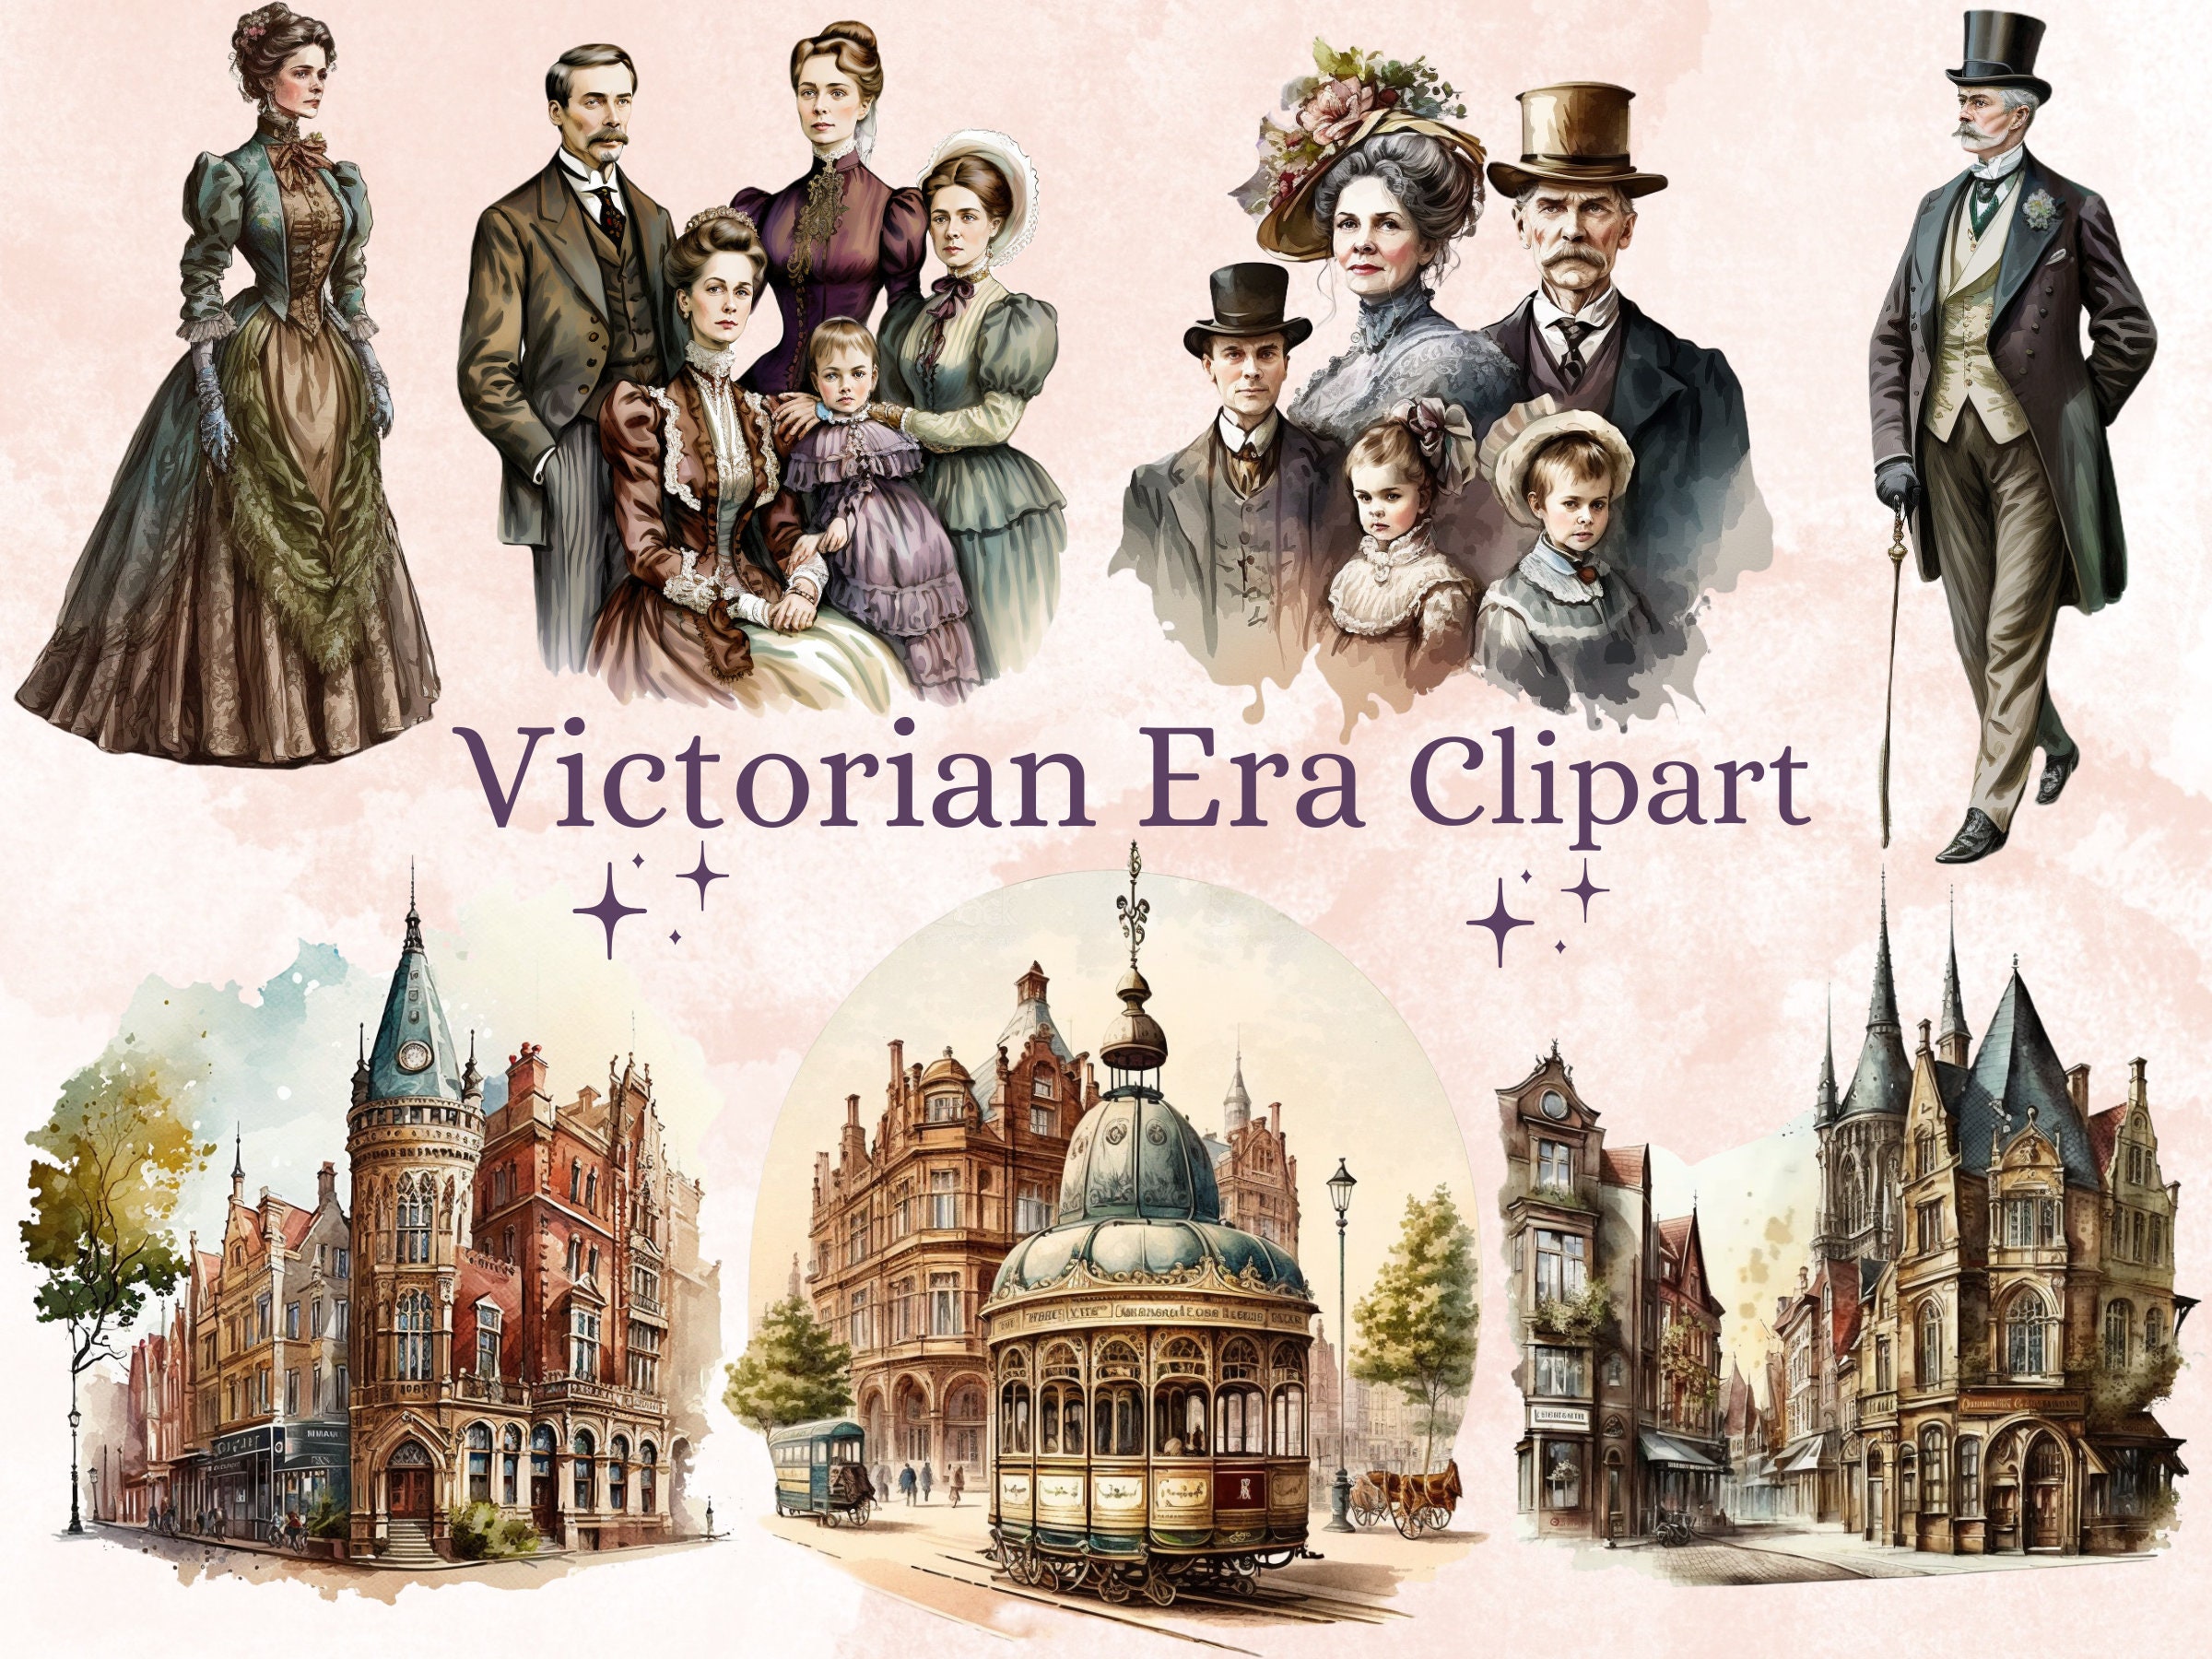 Victorian Ladies' Fashion 1895 ~ Free Clip Art Image - The Old Design Shop